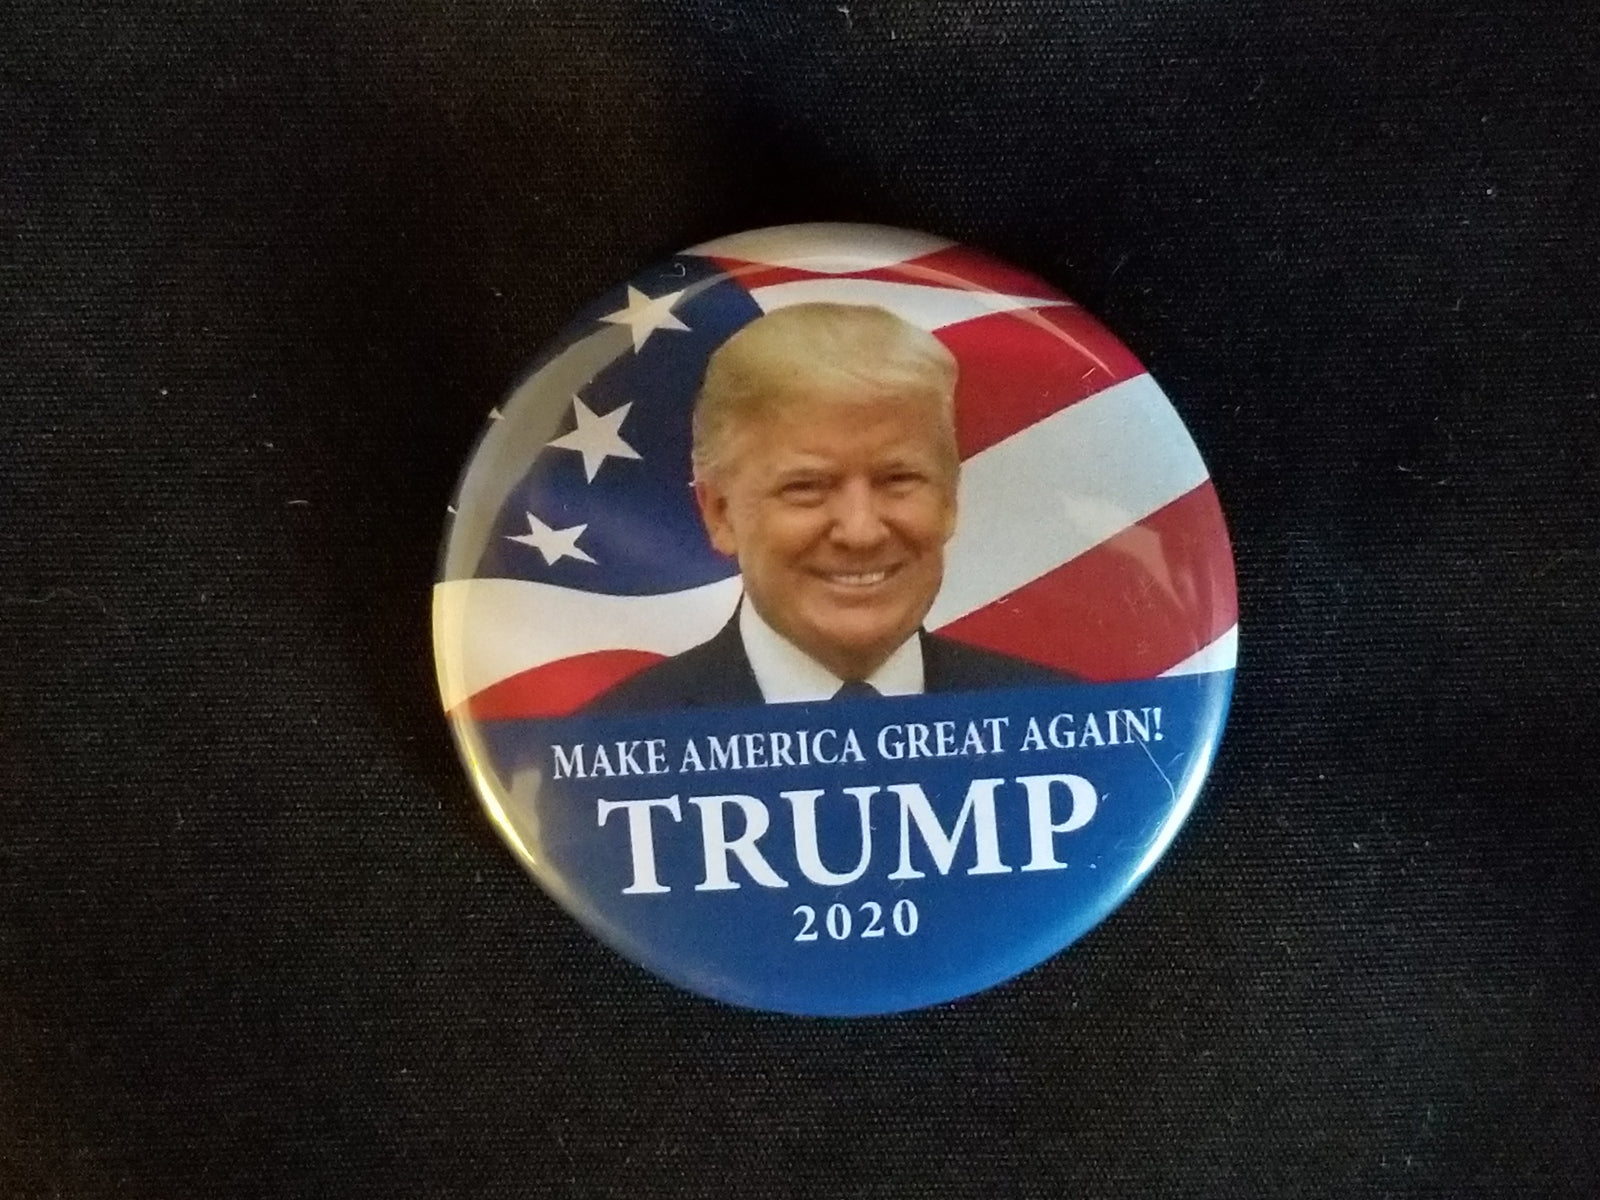 Trump 2020 Election Button